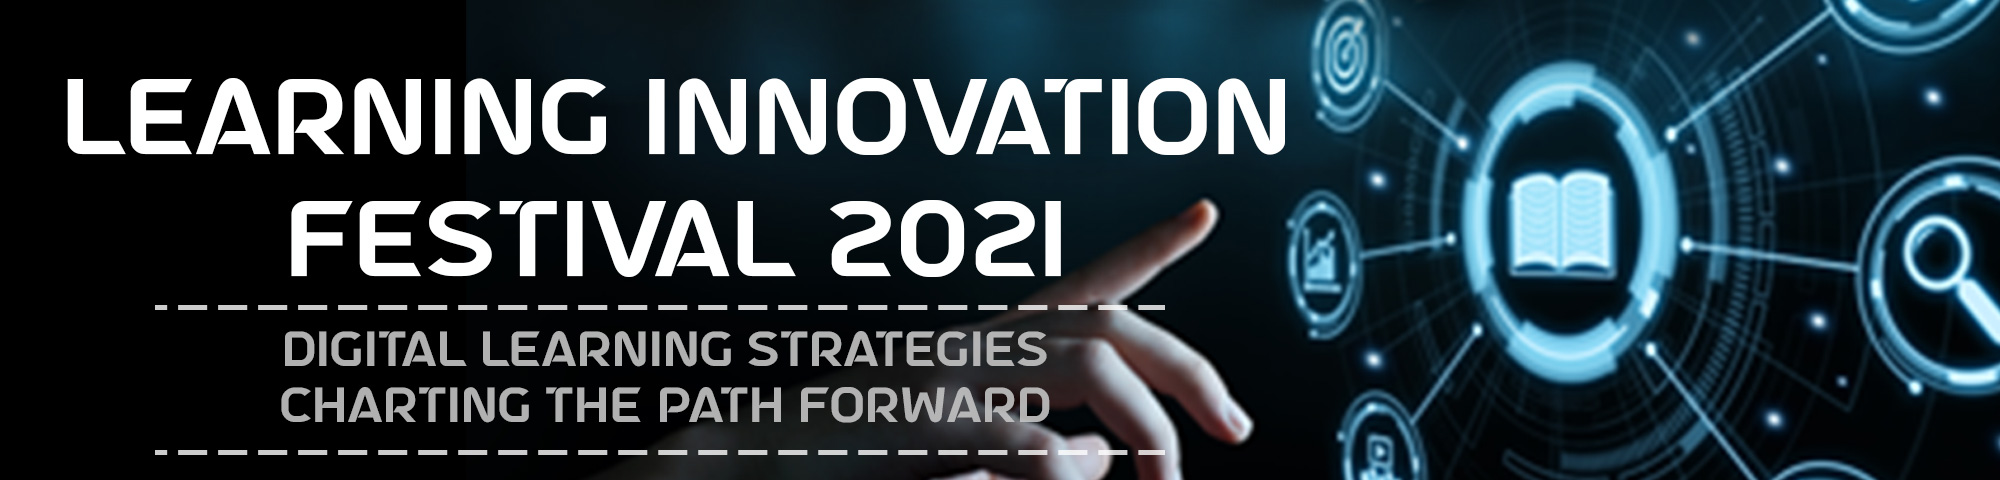 Learning Innovation Festival 2021